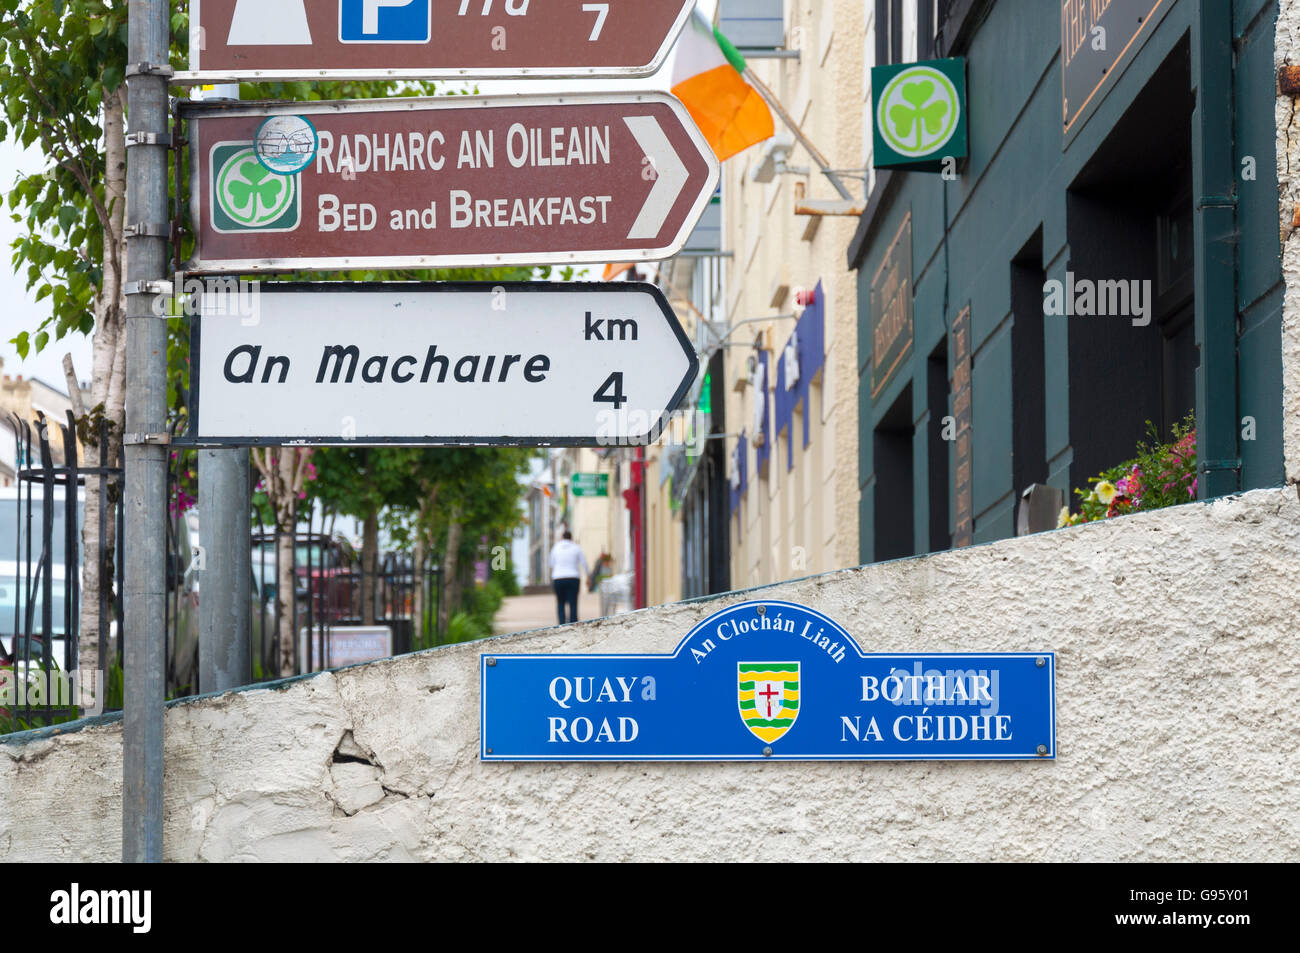 Signage in Gaelic language, Dungloe, County Donegal, Ireland Stock Photo